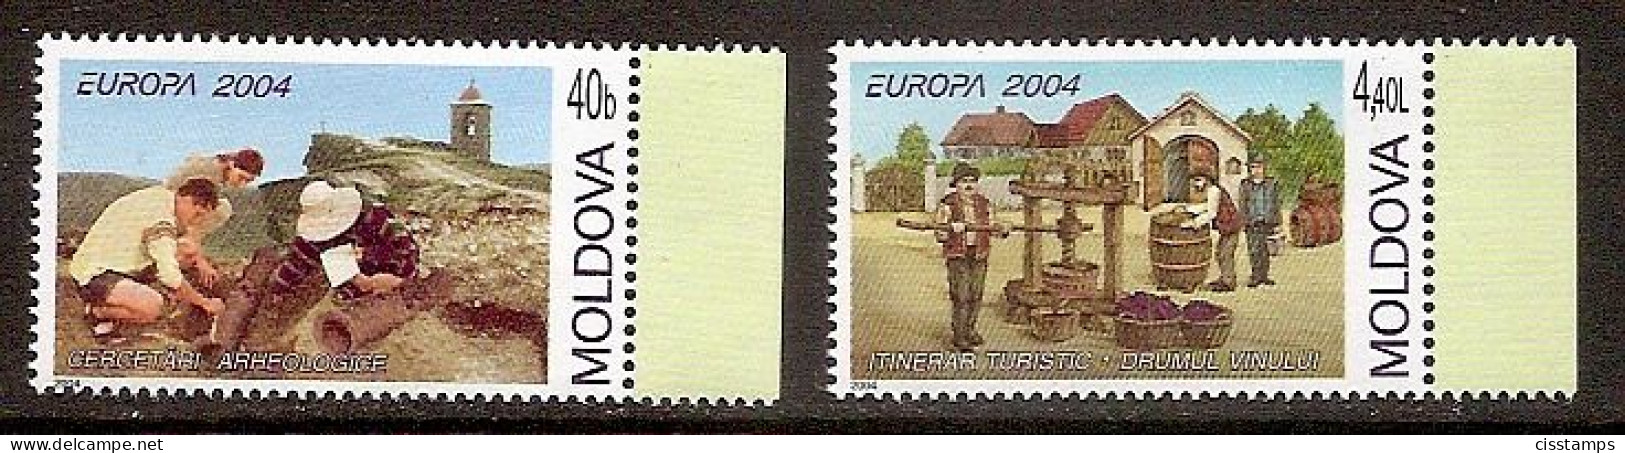 MOLDOVA 2004●EUROPA  Archeology●Wine Making●●Archäologie●Weinbau /Mi487-88 MNH - Moldavie